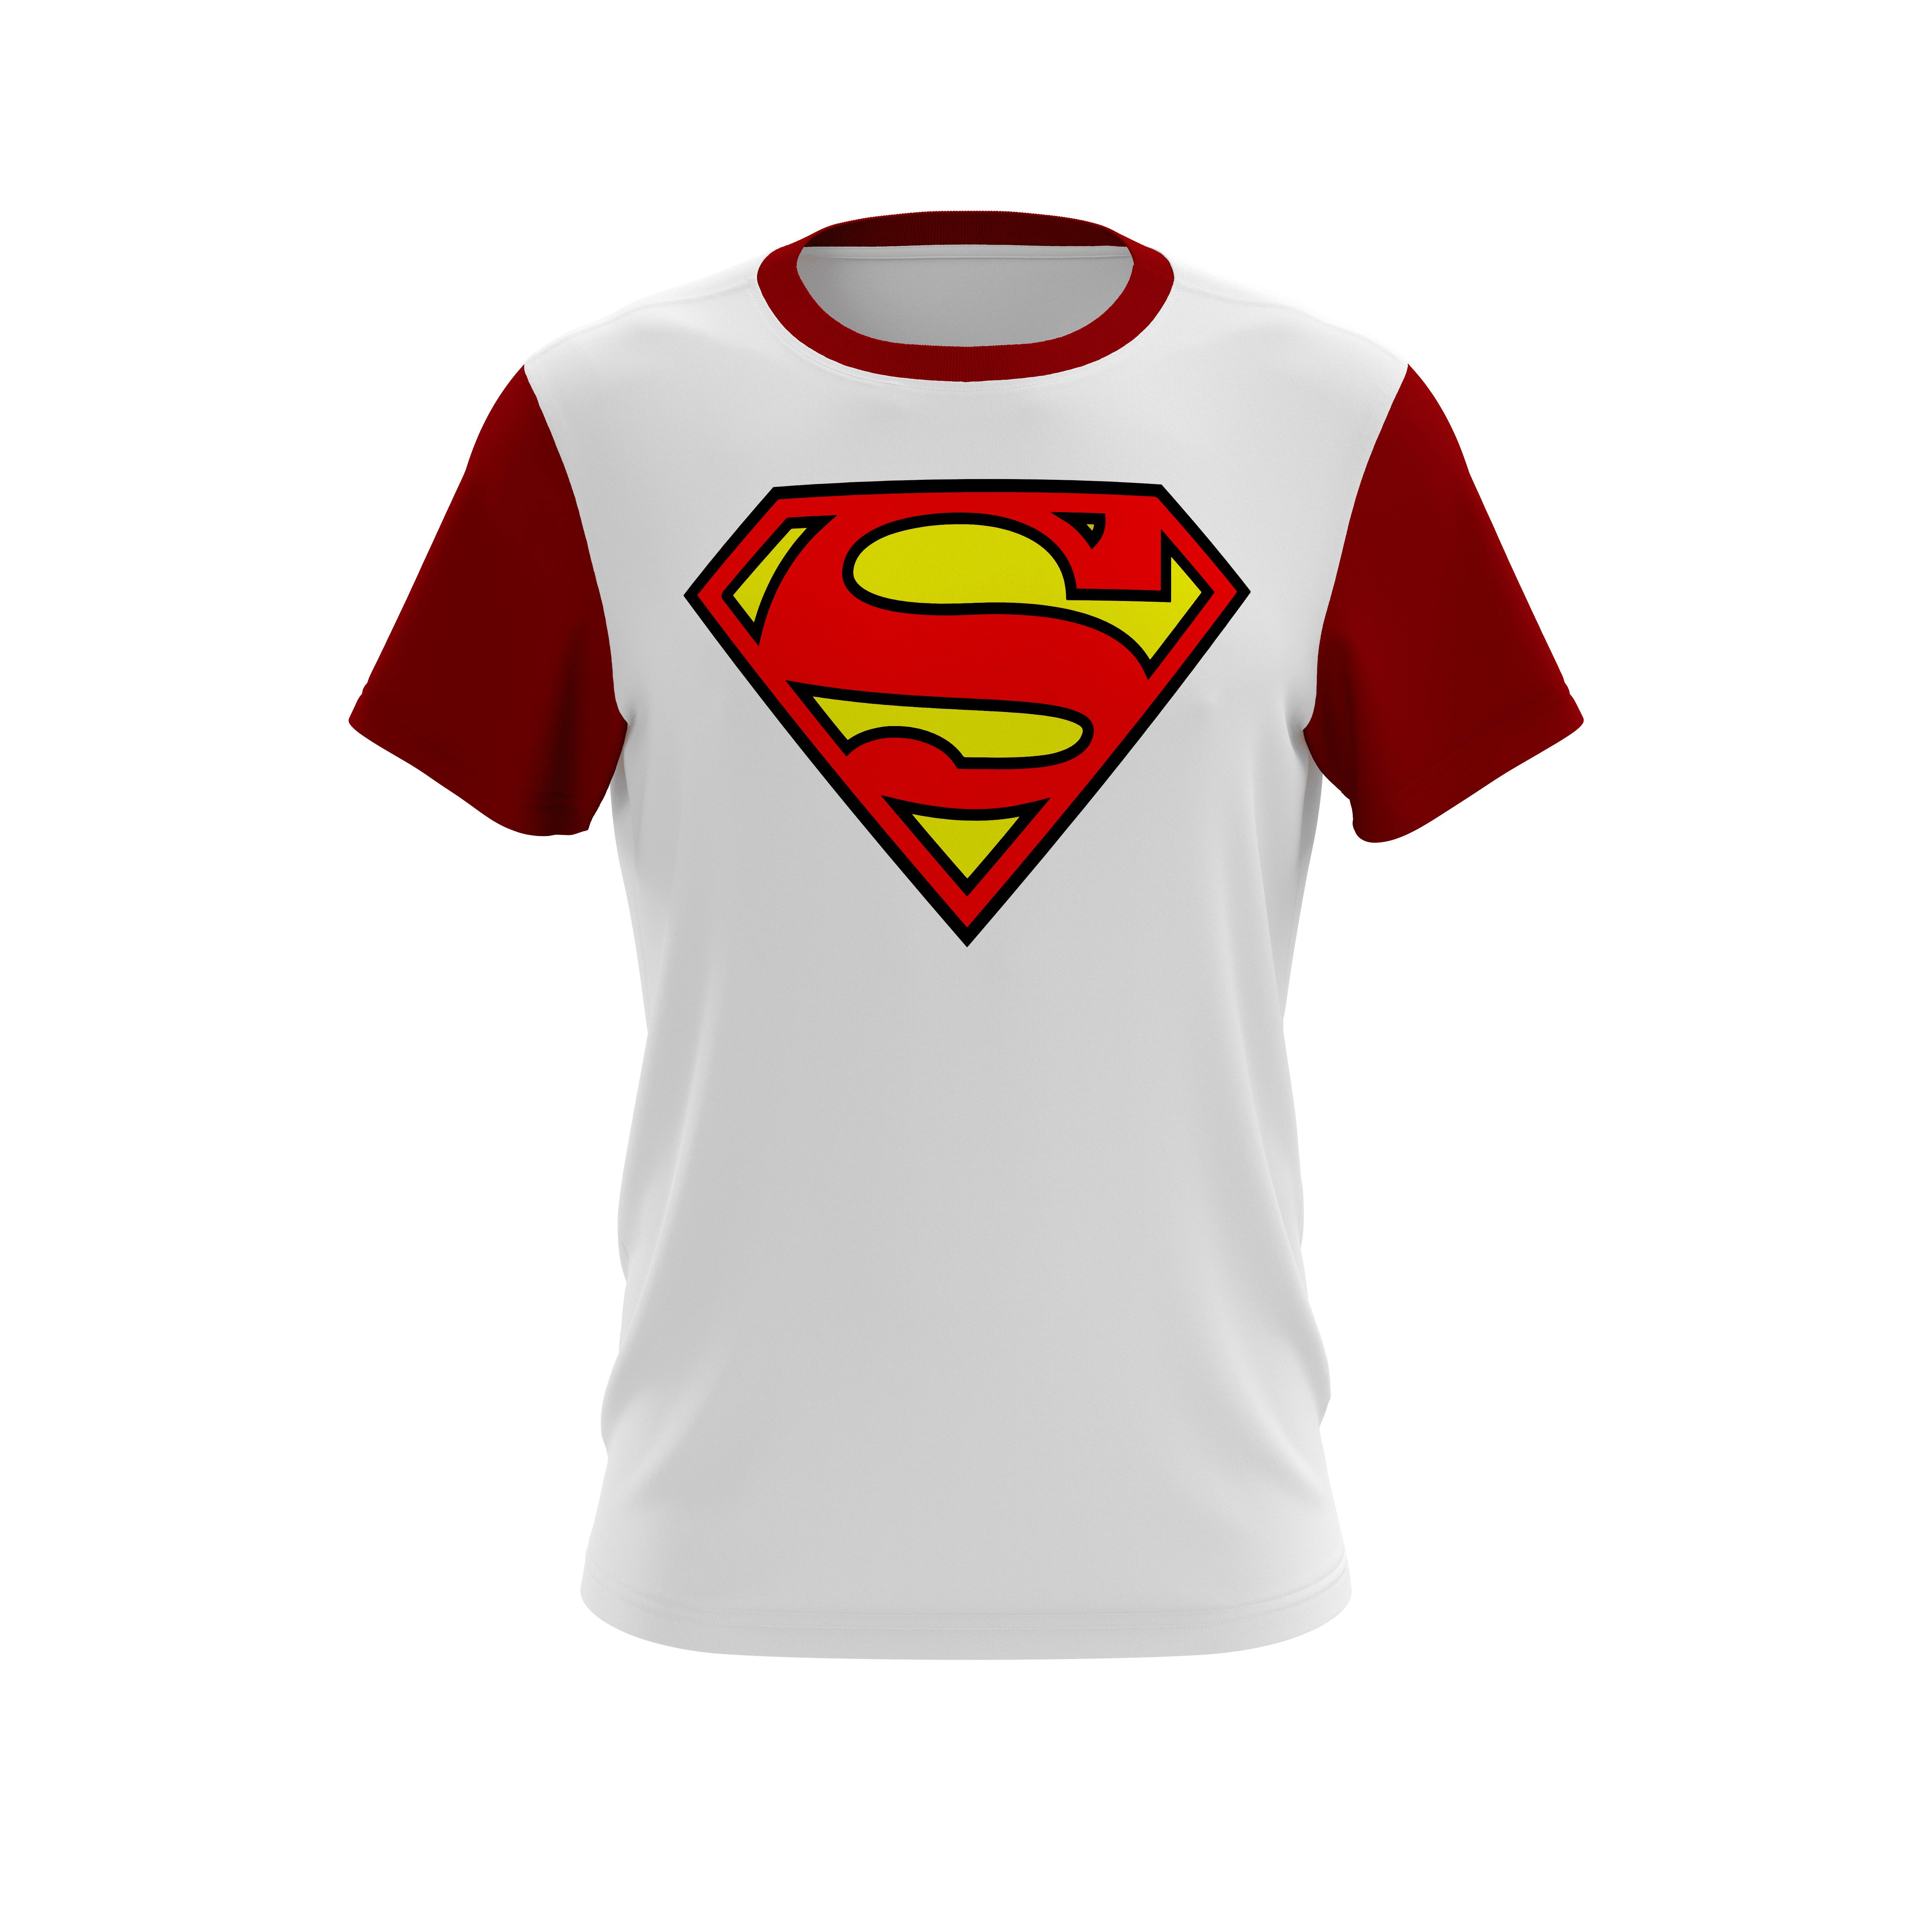 Camisetas largas - Oversize Hombre Superman